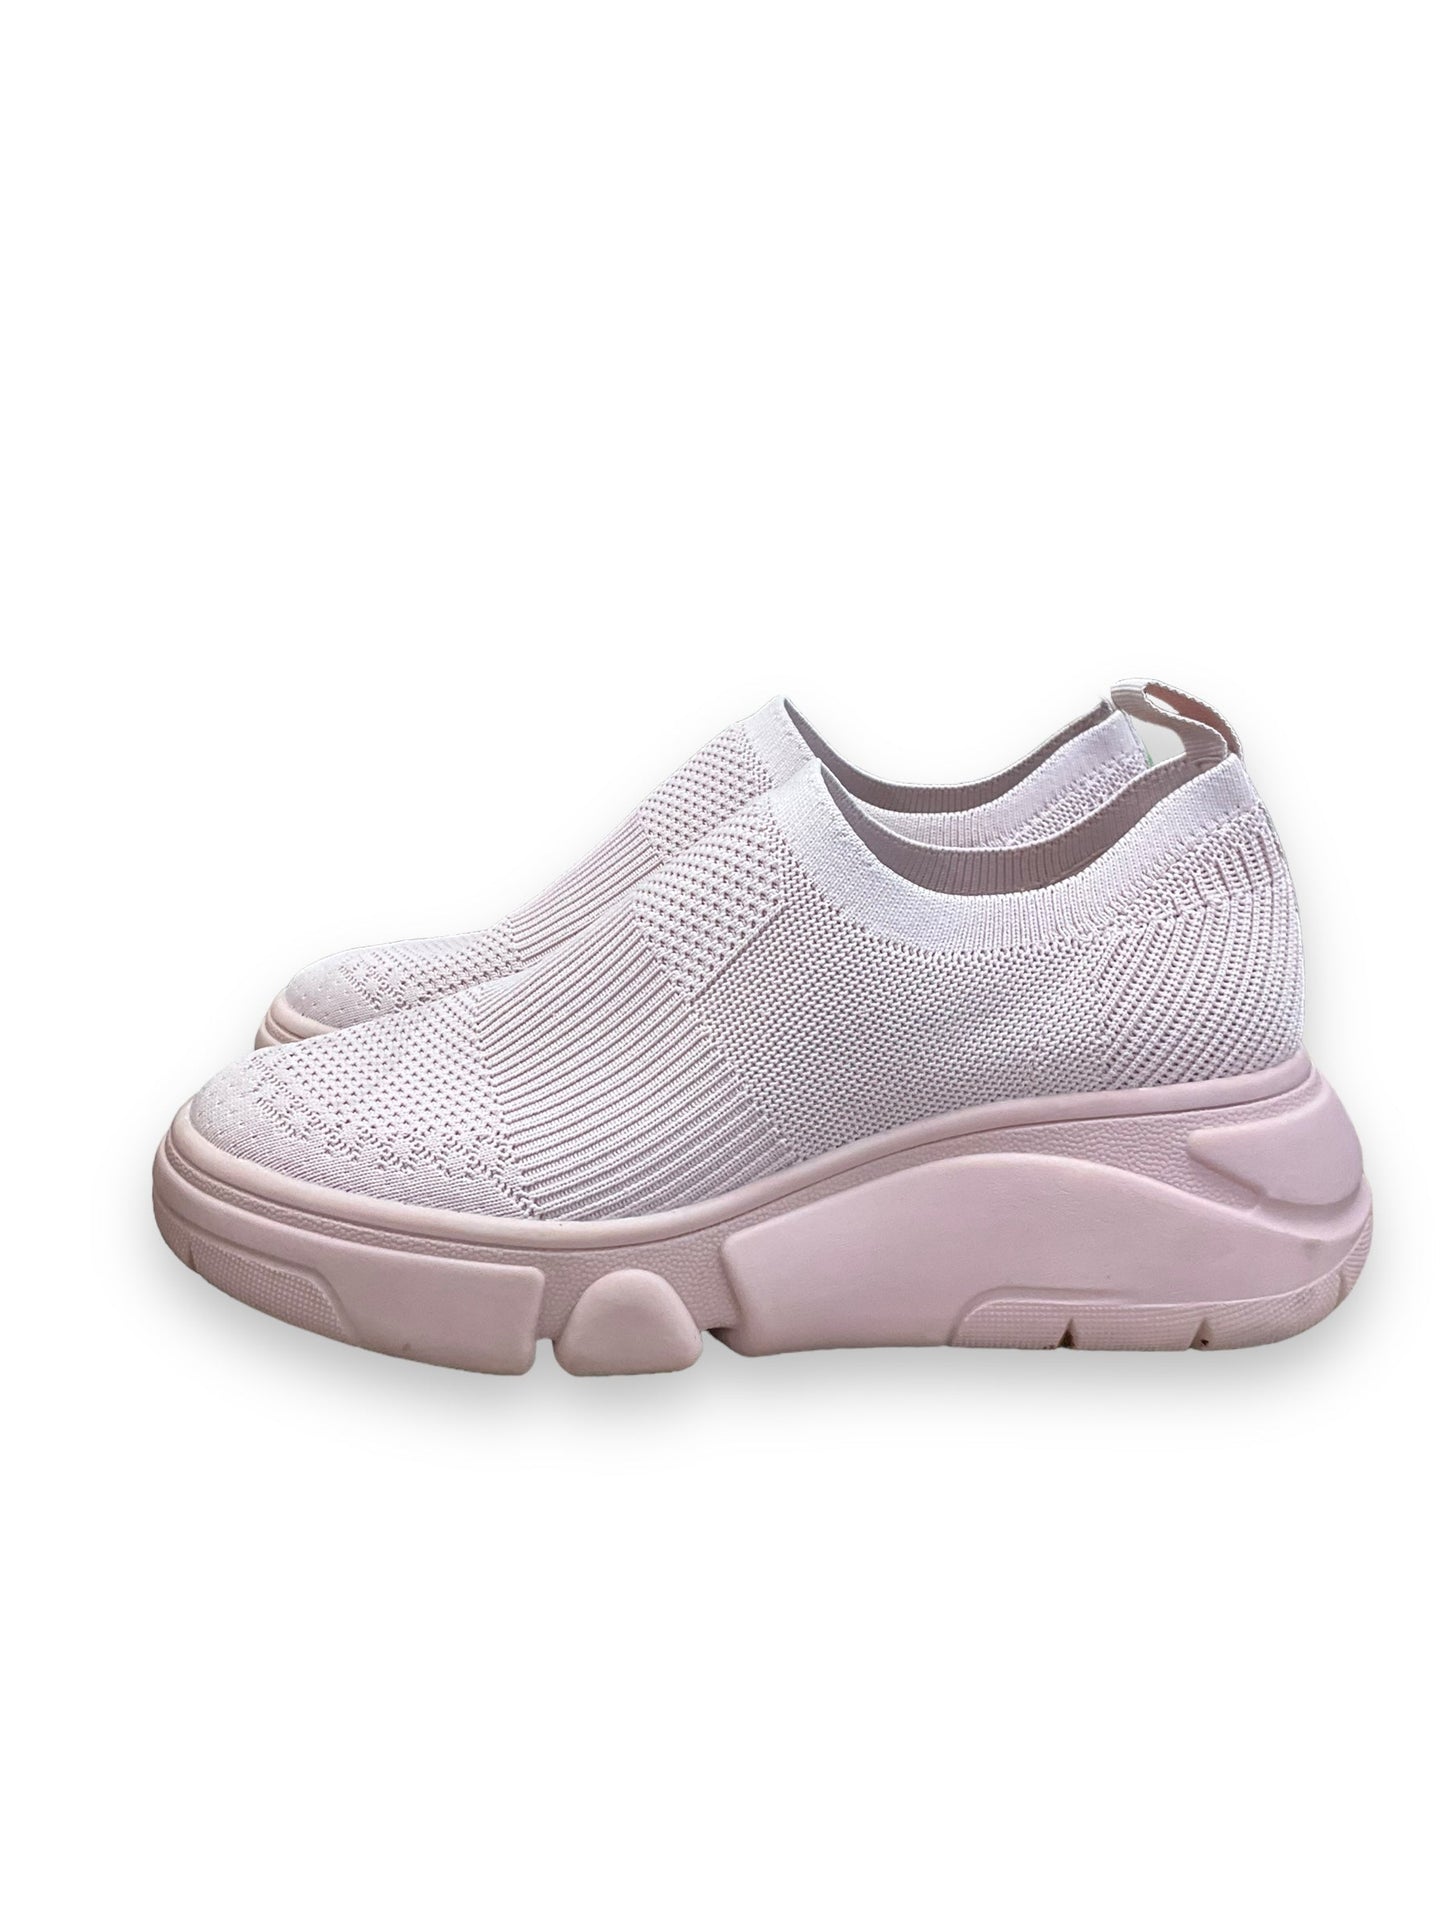 Plaid Pattern Shoes Sneakers Mix No 6, Size 8